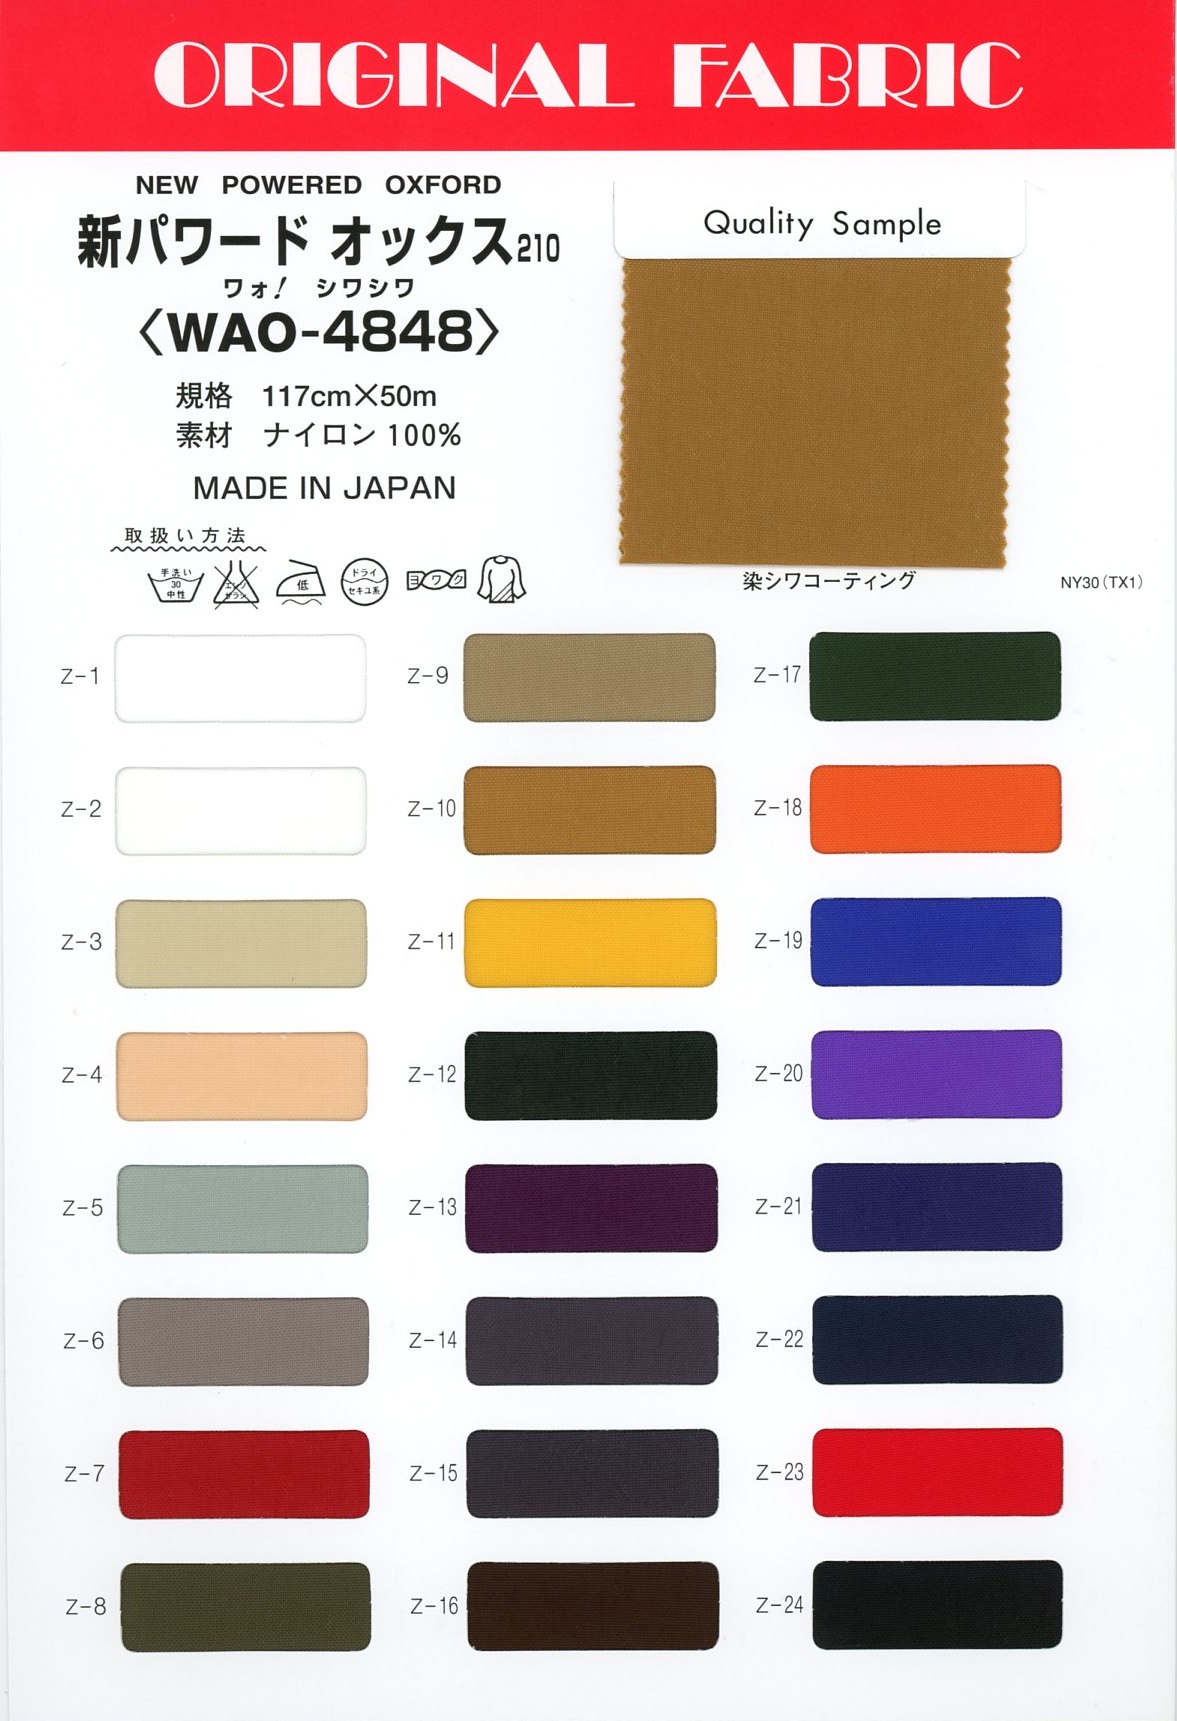 WAO-4848 Nouveau Powered Oxford 210[Fabrication De Textile] Masuda